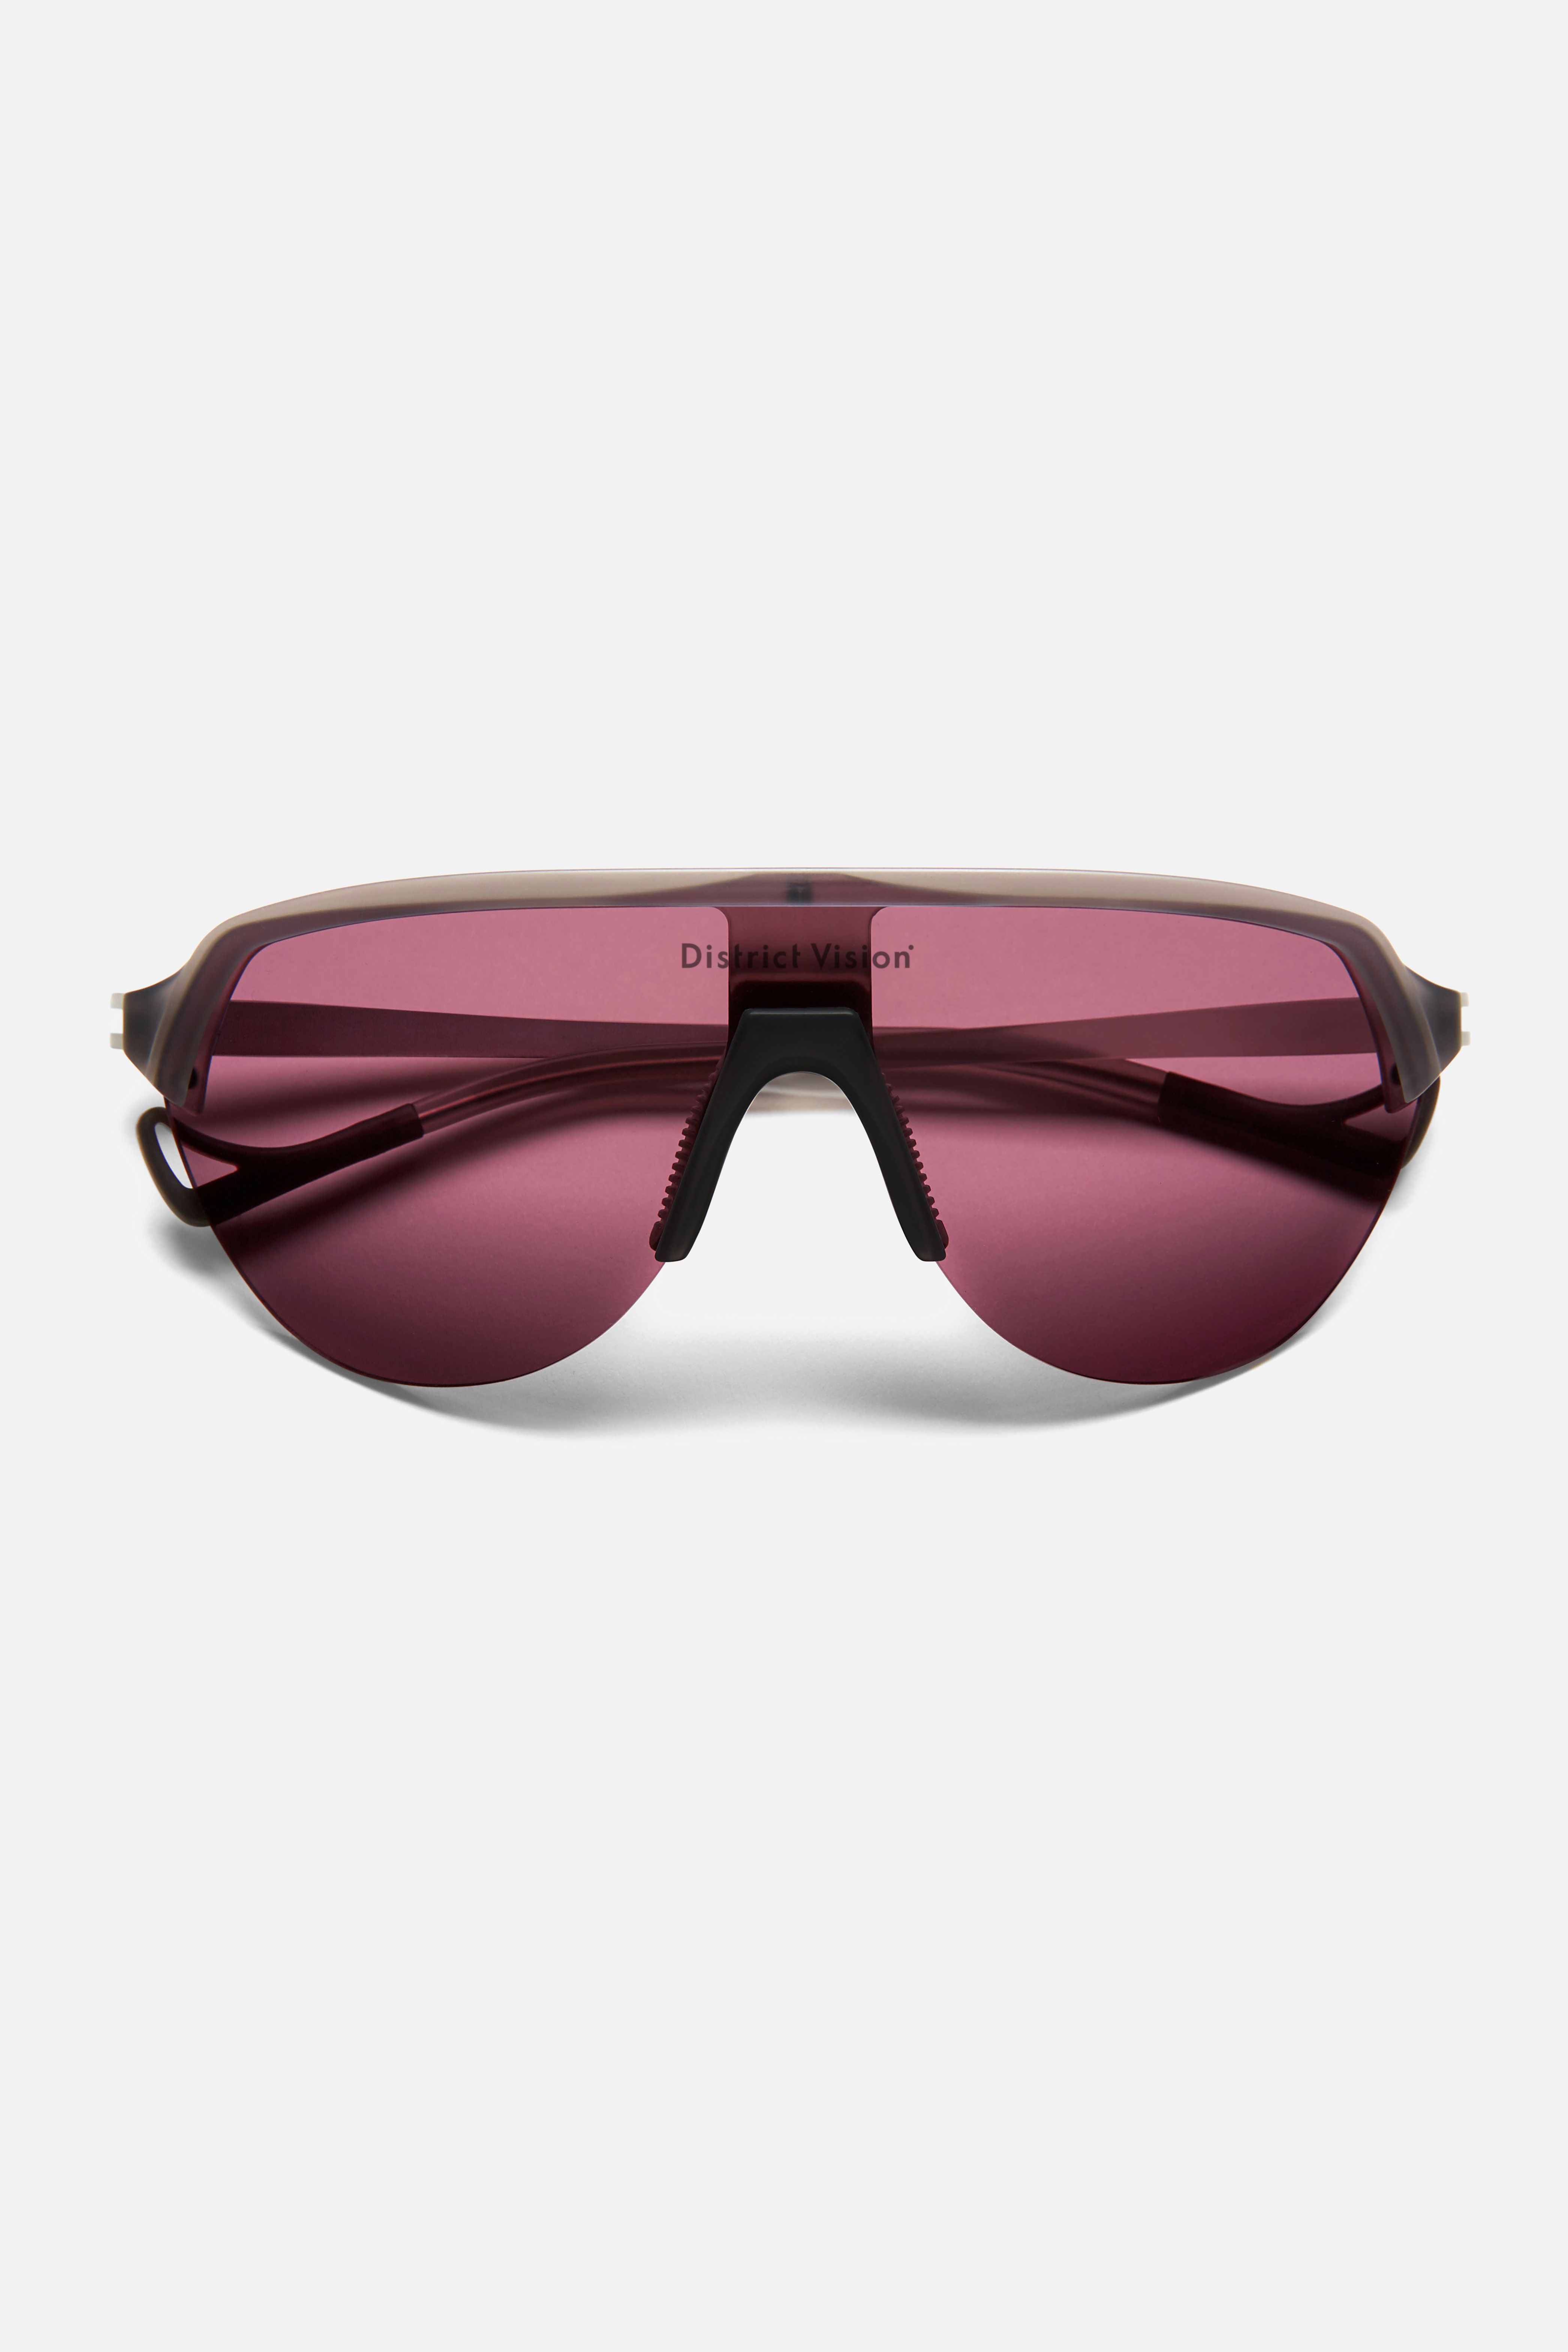 SPY Monolith Speed Sunglasses Matte White/Teal - Happy Gray Green Purple  Mirror | eBay